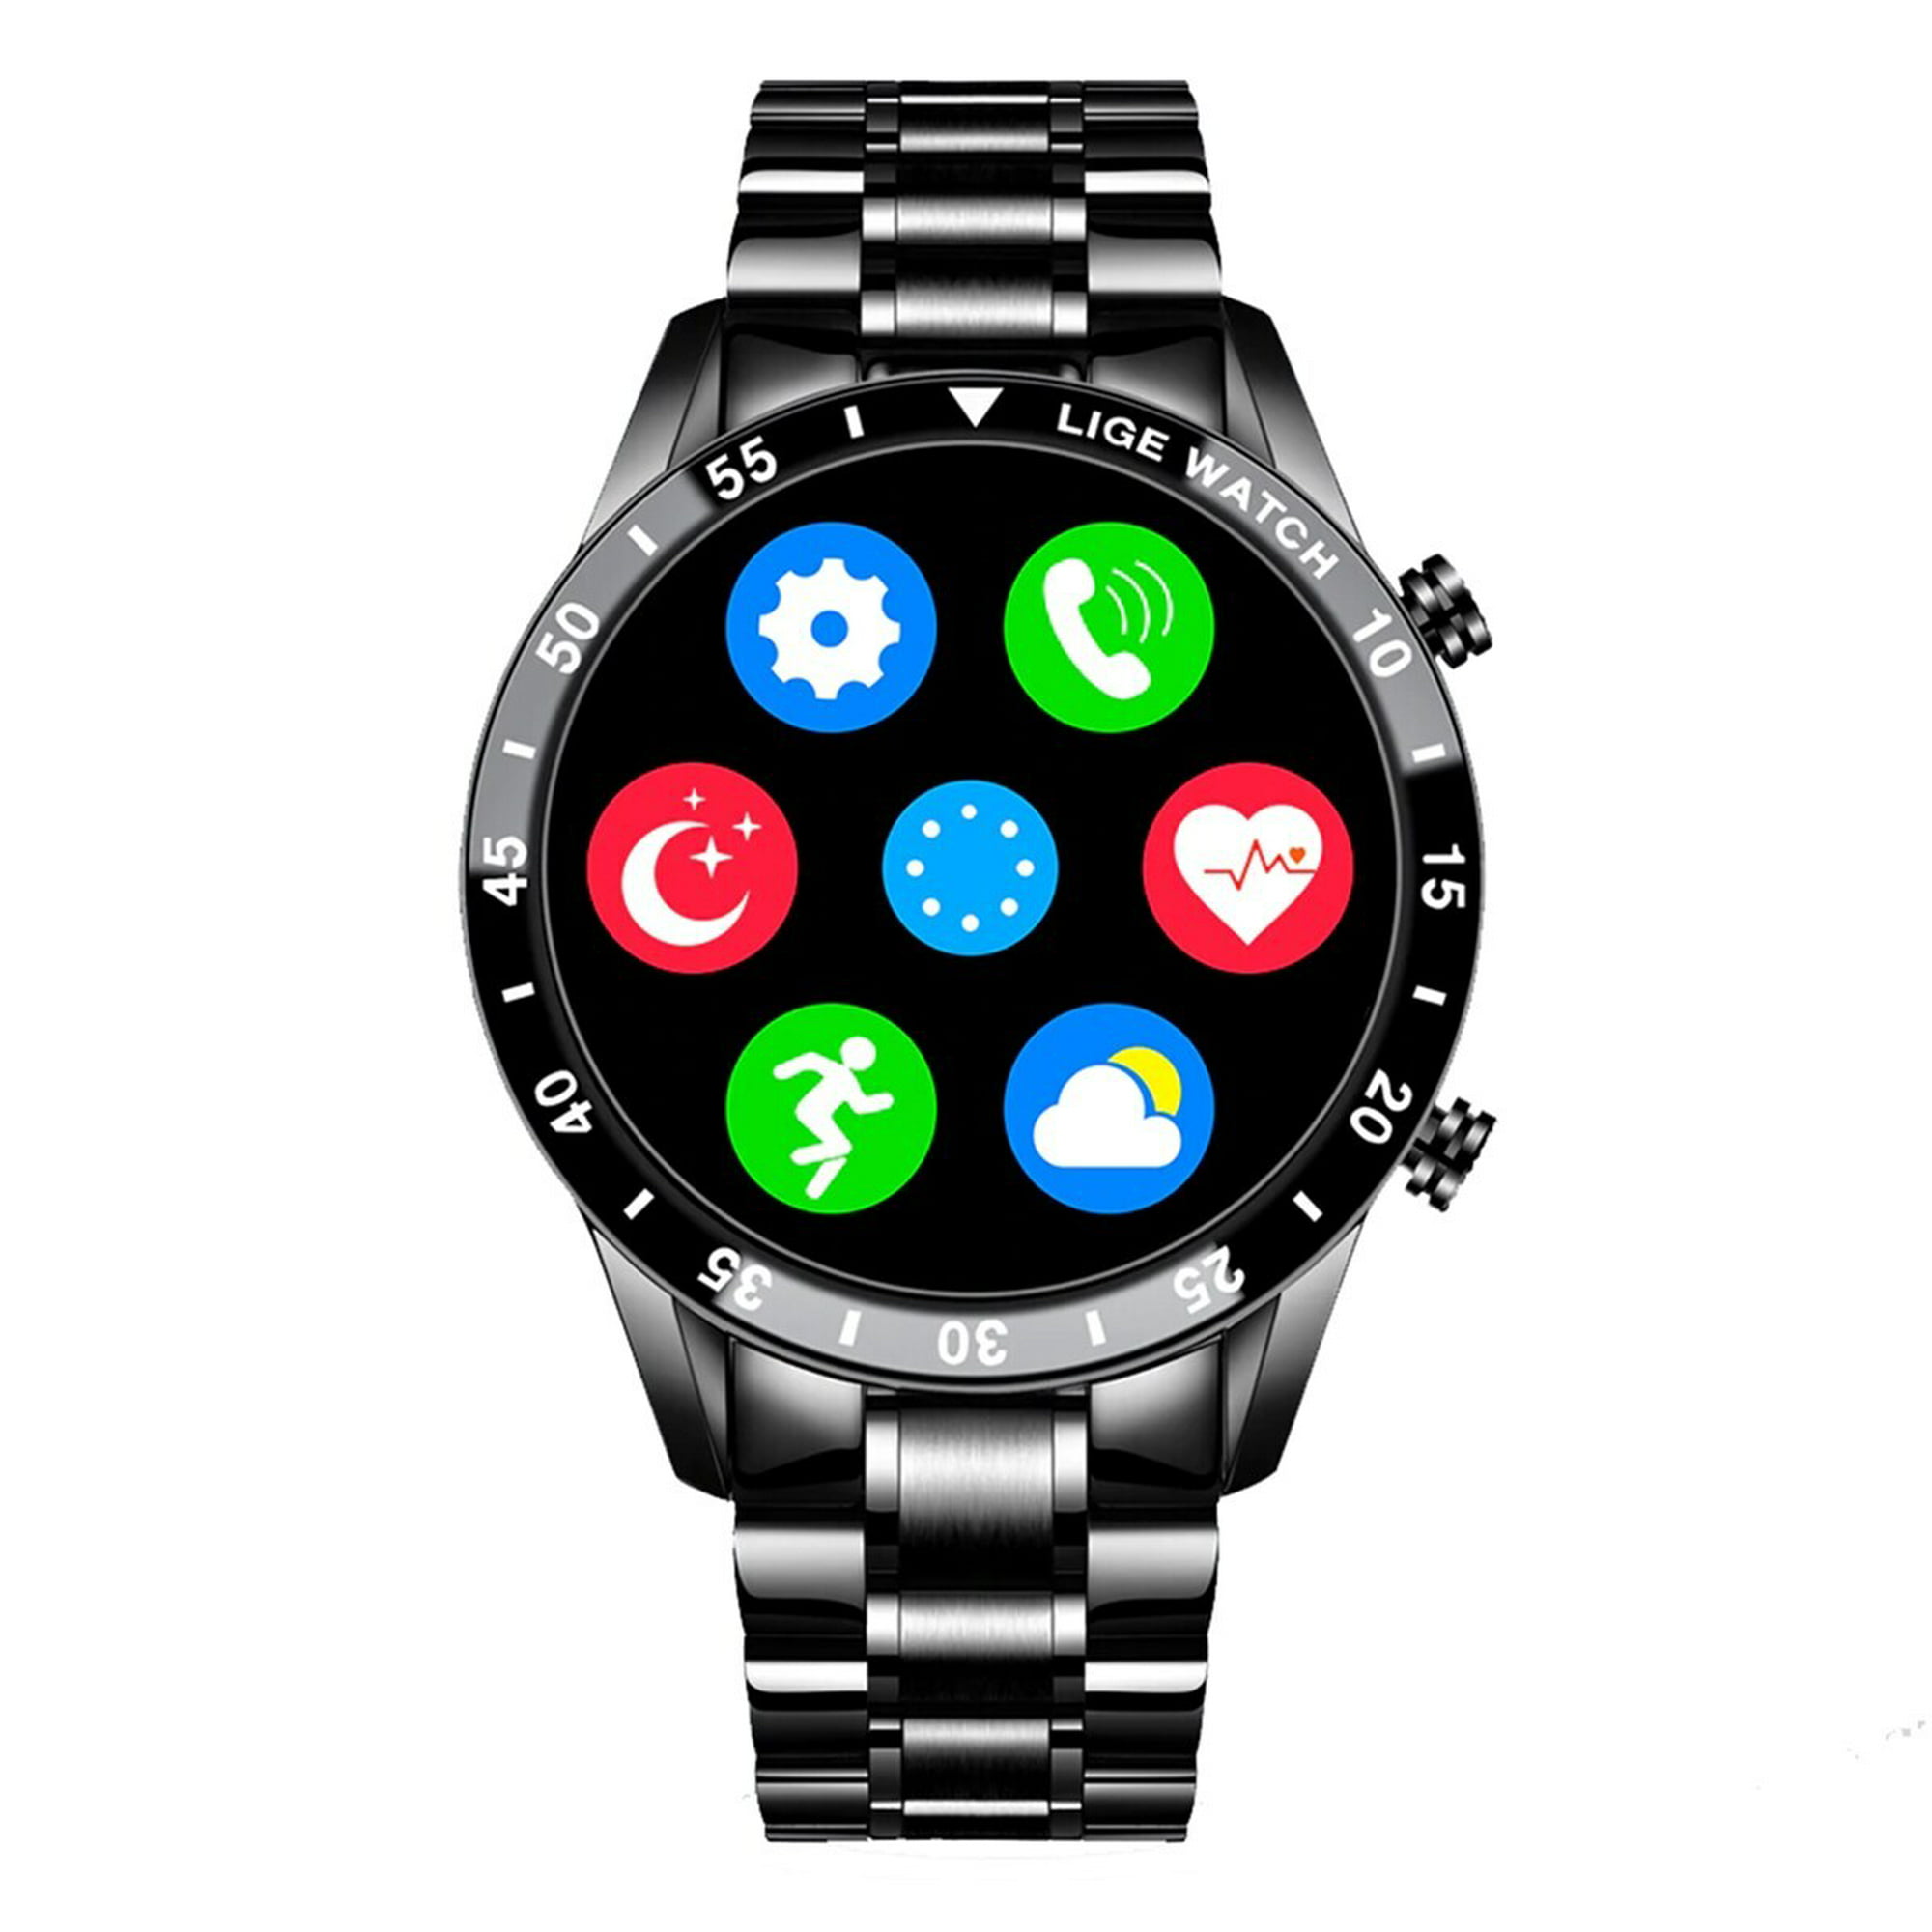 Fralugio smartwatch reloj inteligente lige bw220 pantalla hd monitor cardiaco fralugio lujo